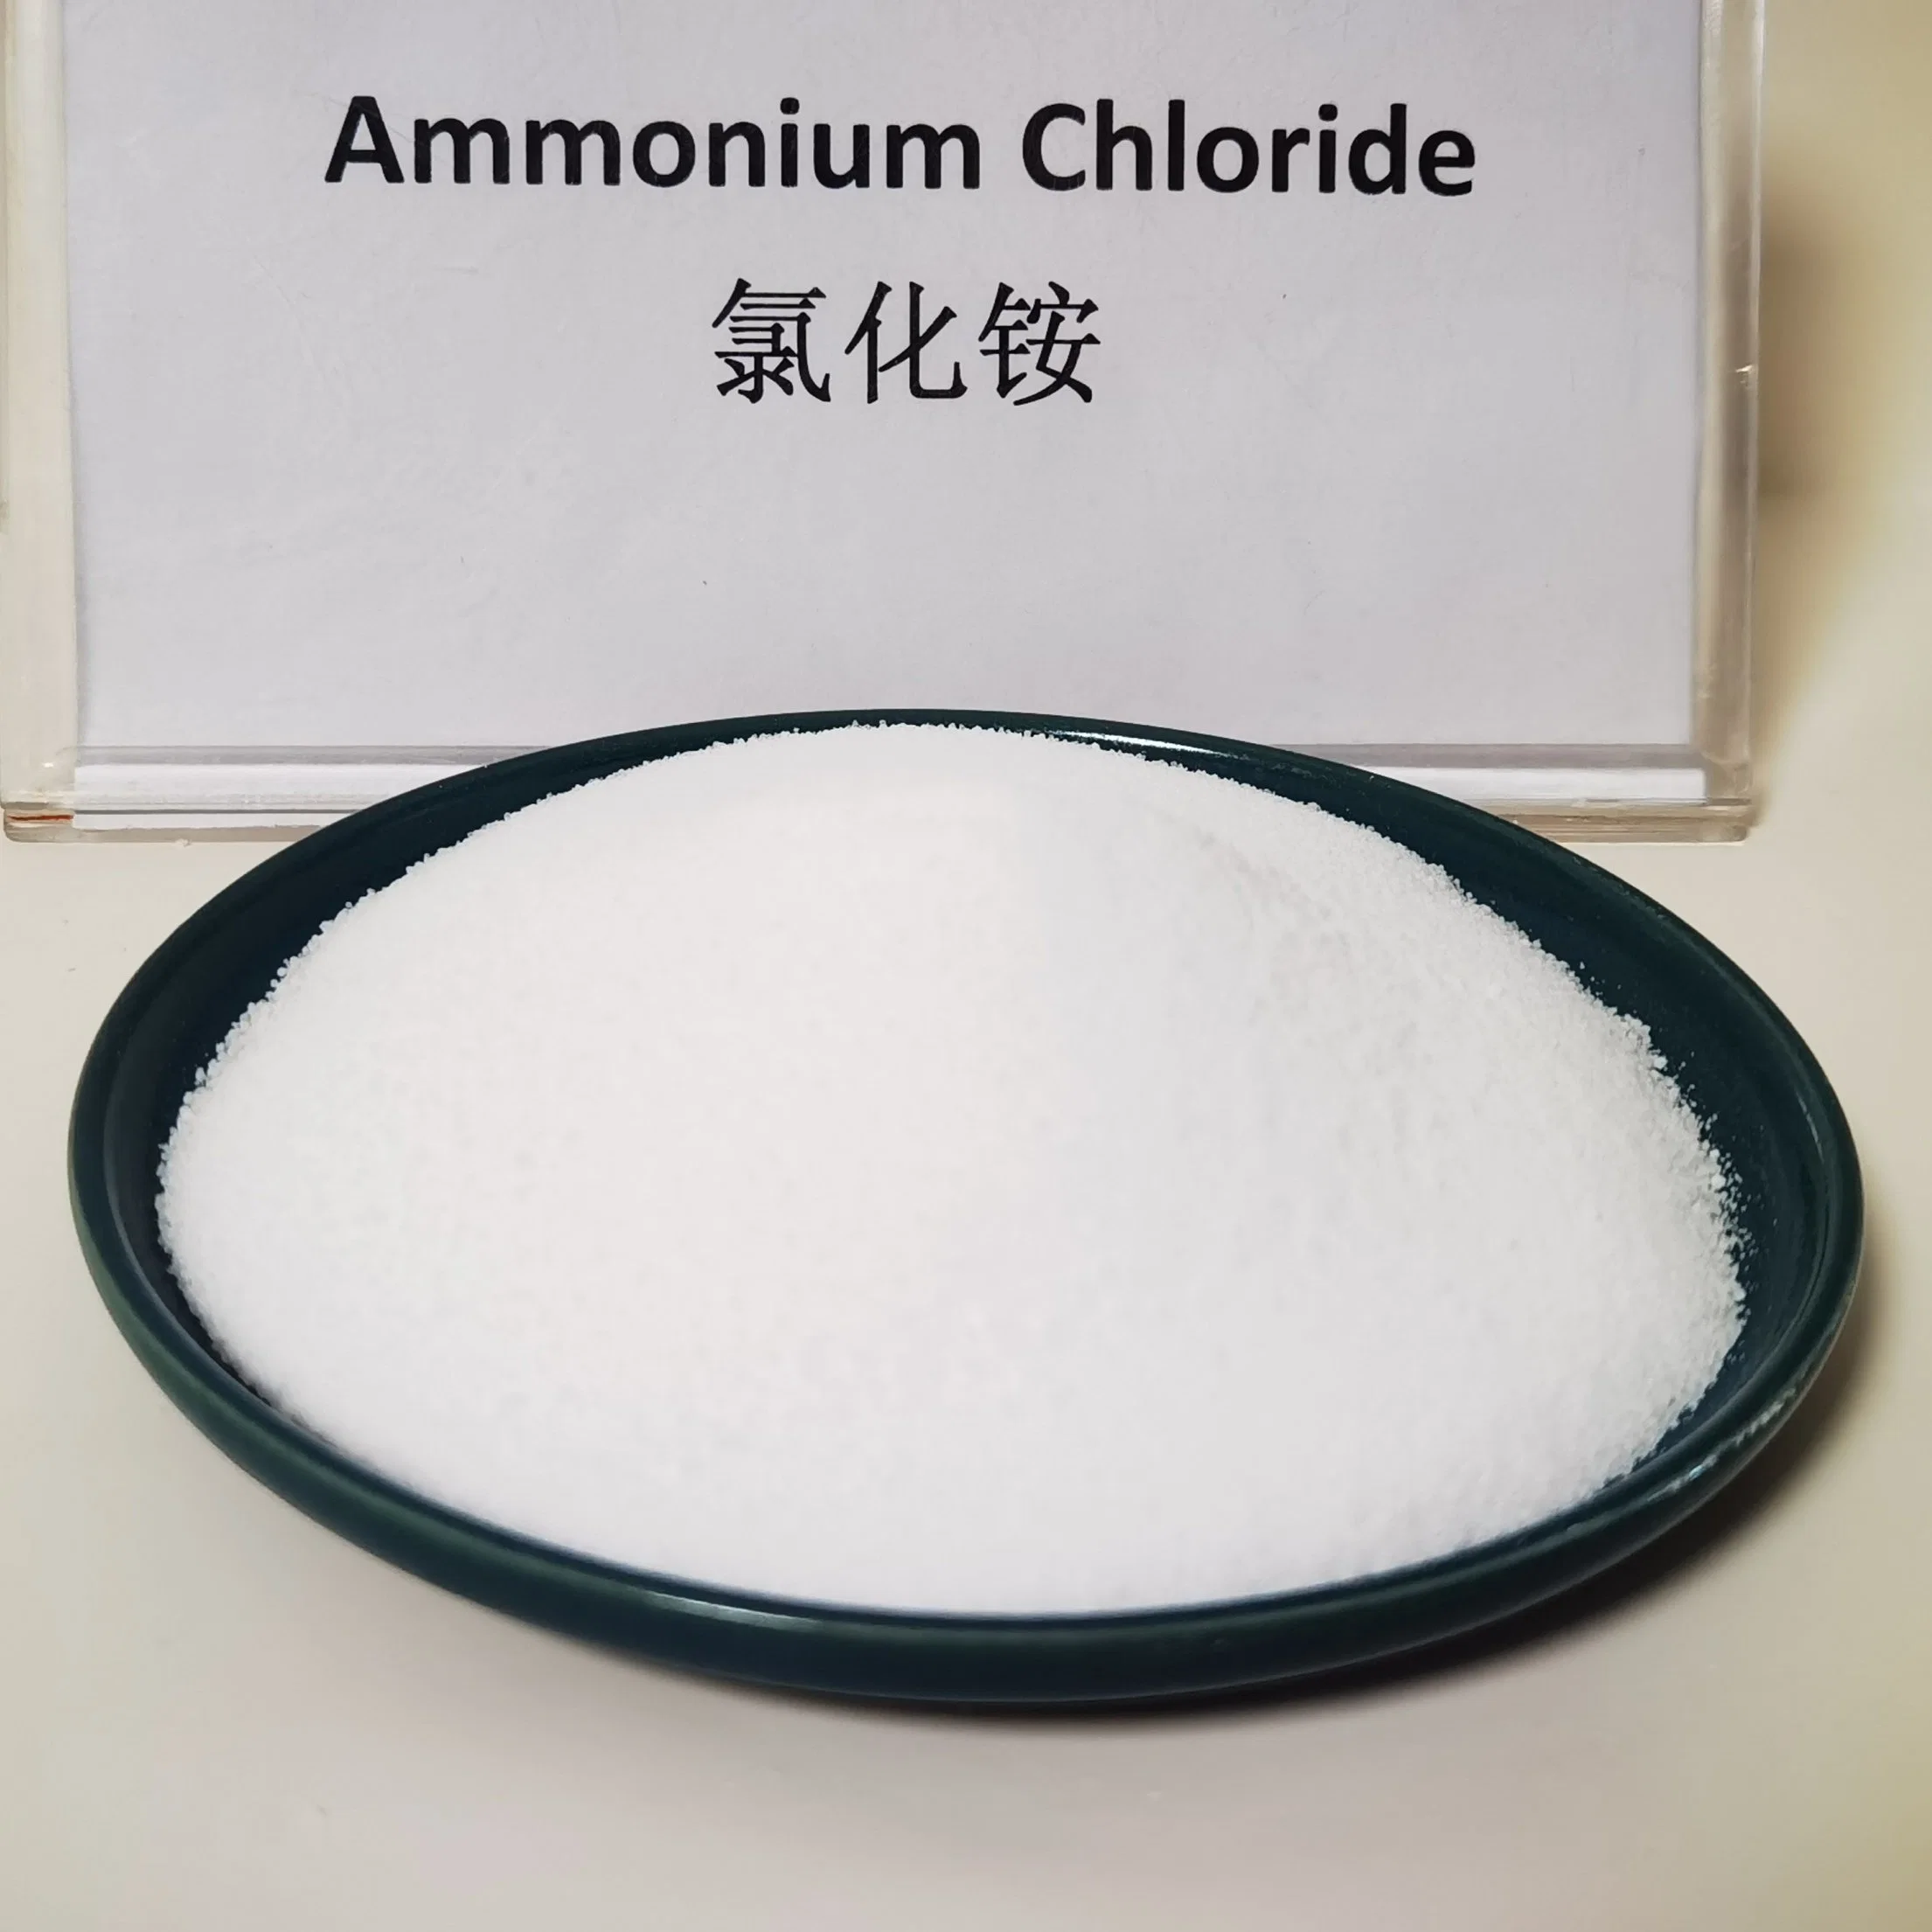 Ammonium Chloride for Docosyltrimethylammonium Chloride 98% Purity CAS 17301-53-0 Bihenyl Trimethyl